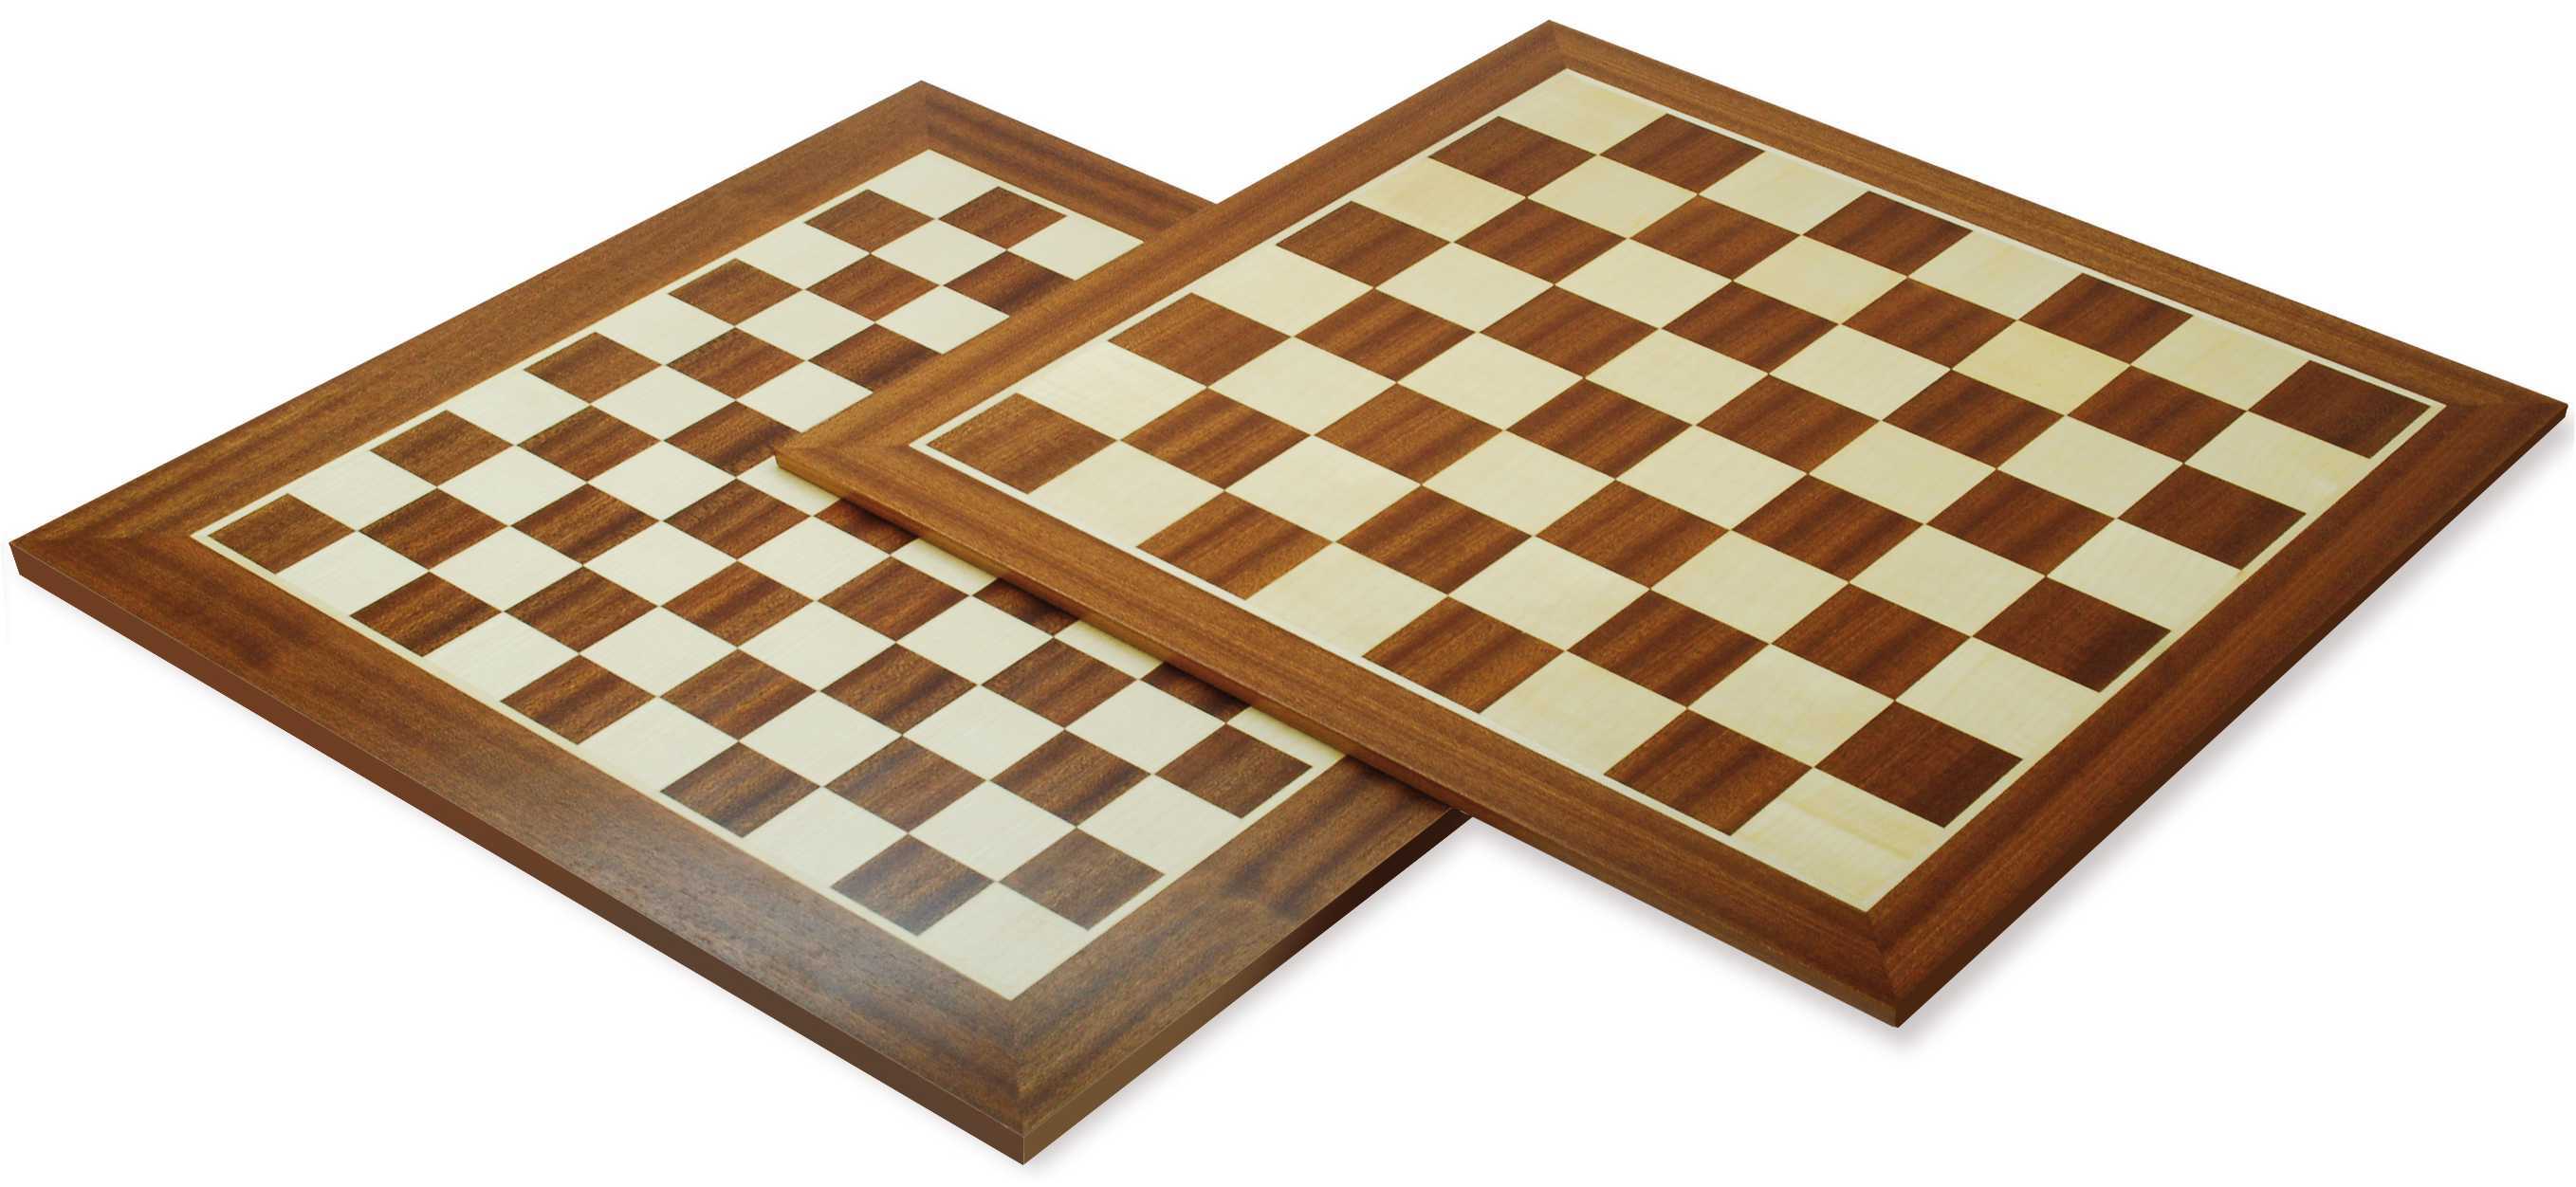 Classic Chess/Draughts set mahogany